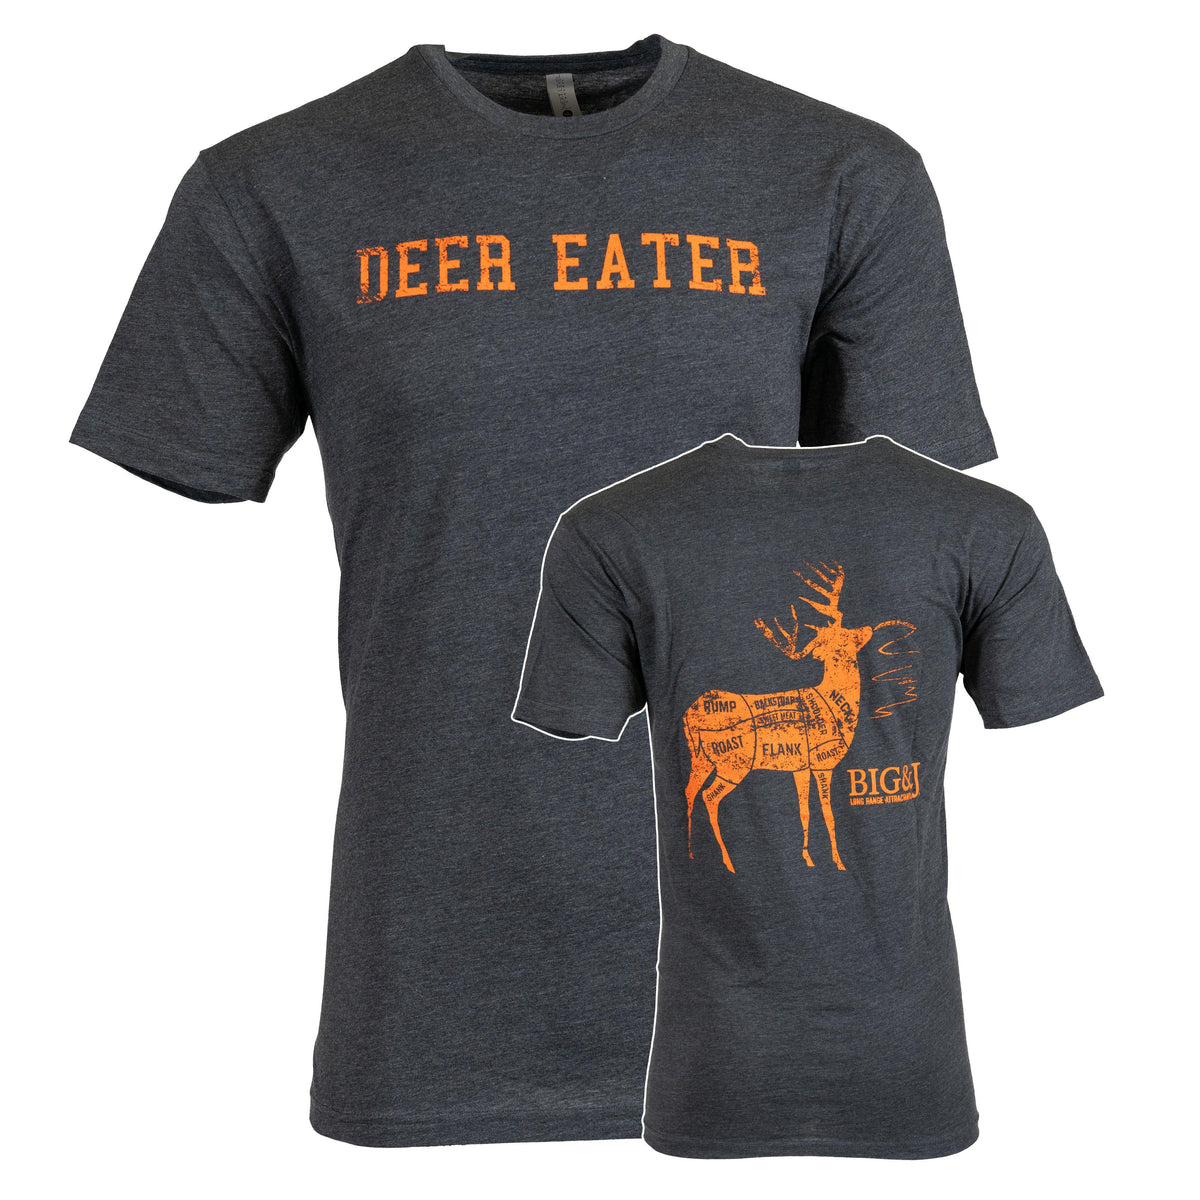 Charcoal with Orange Lettering Deer Eater Shirt